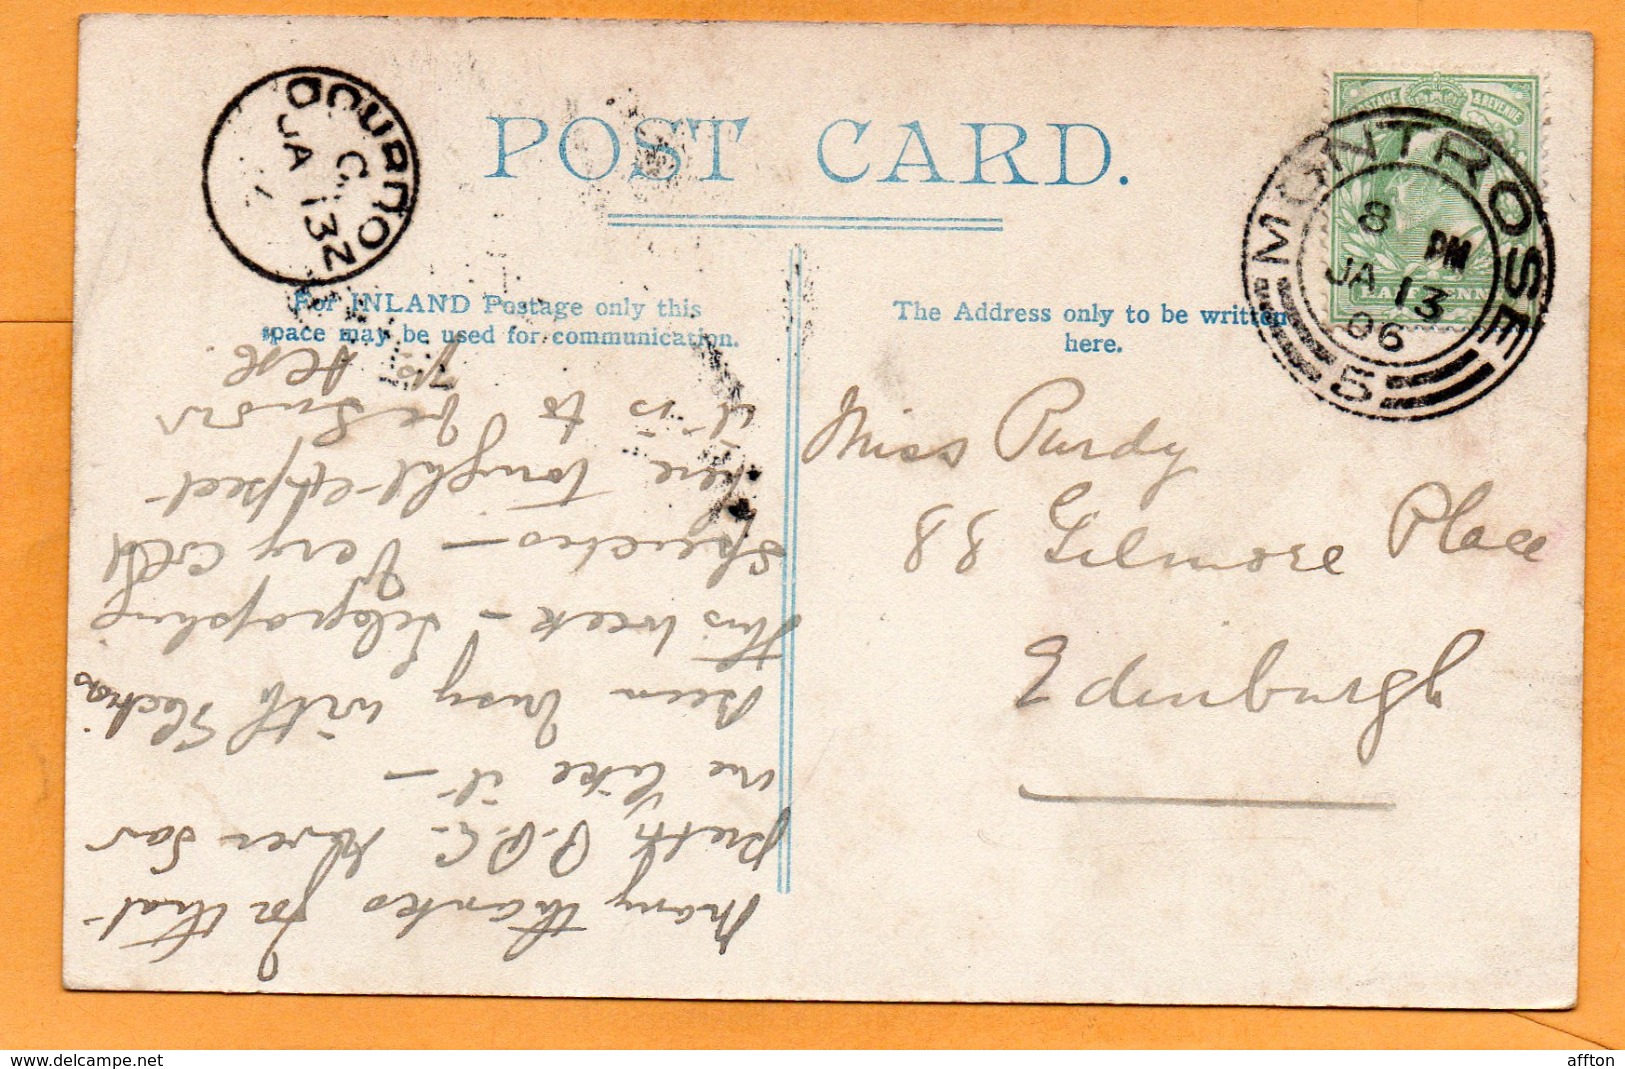 Montrose UK 1906 Postcard - Angus